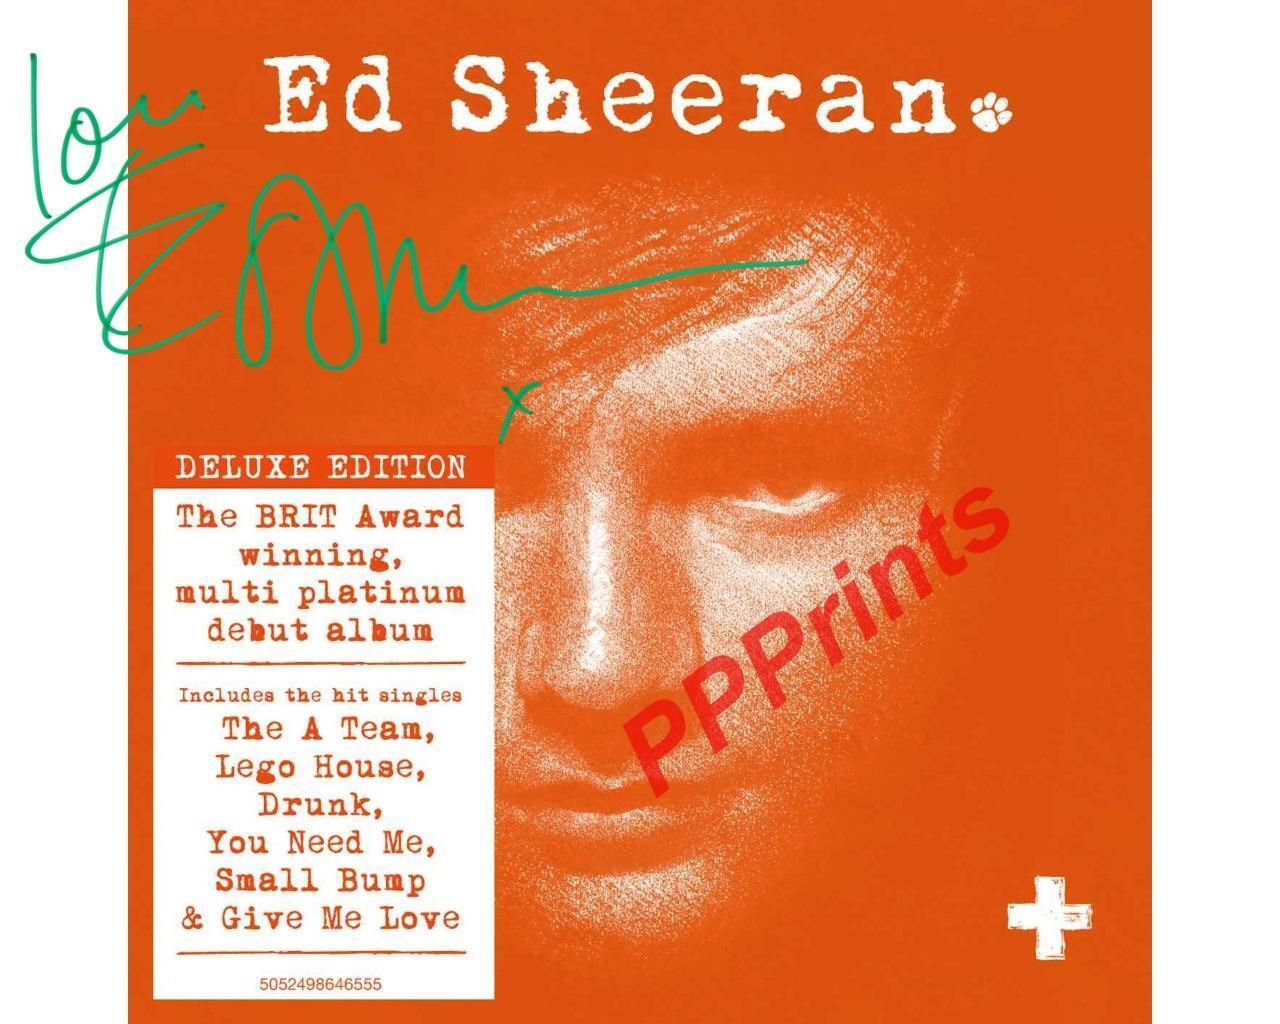 ED SHEERAN ALBUM ARTWORK AUTOGRAPHED 10X8 SIGNED REPRO Photo Poster painting PRINT